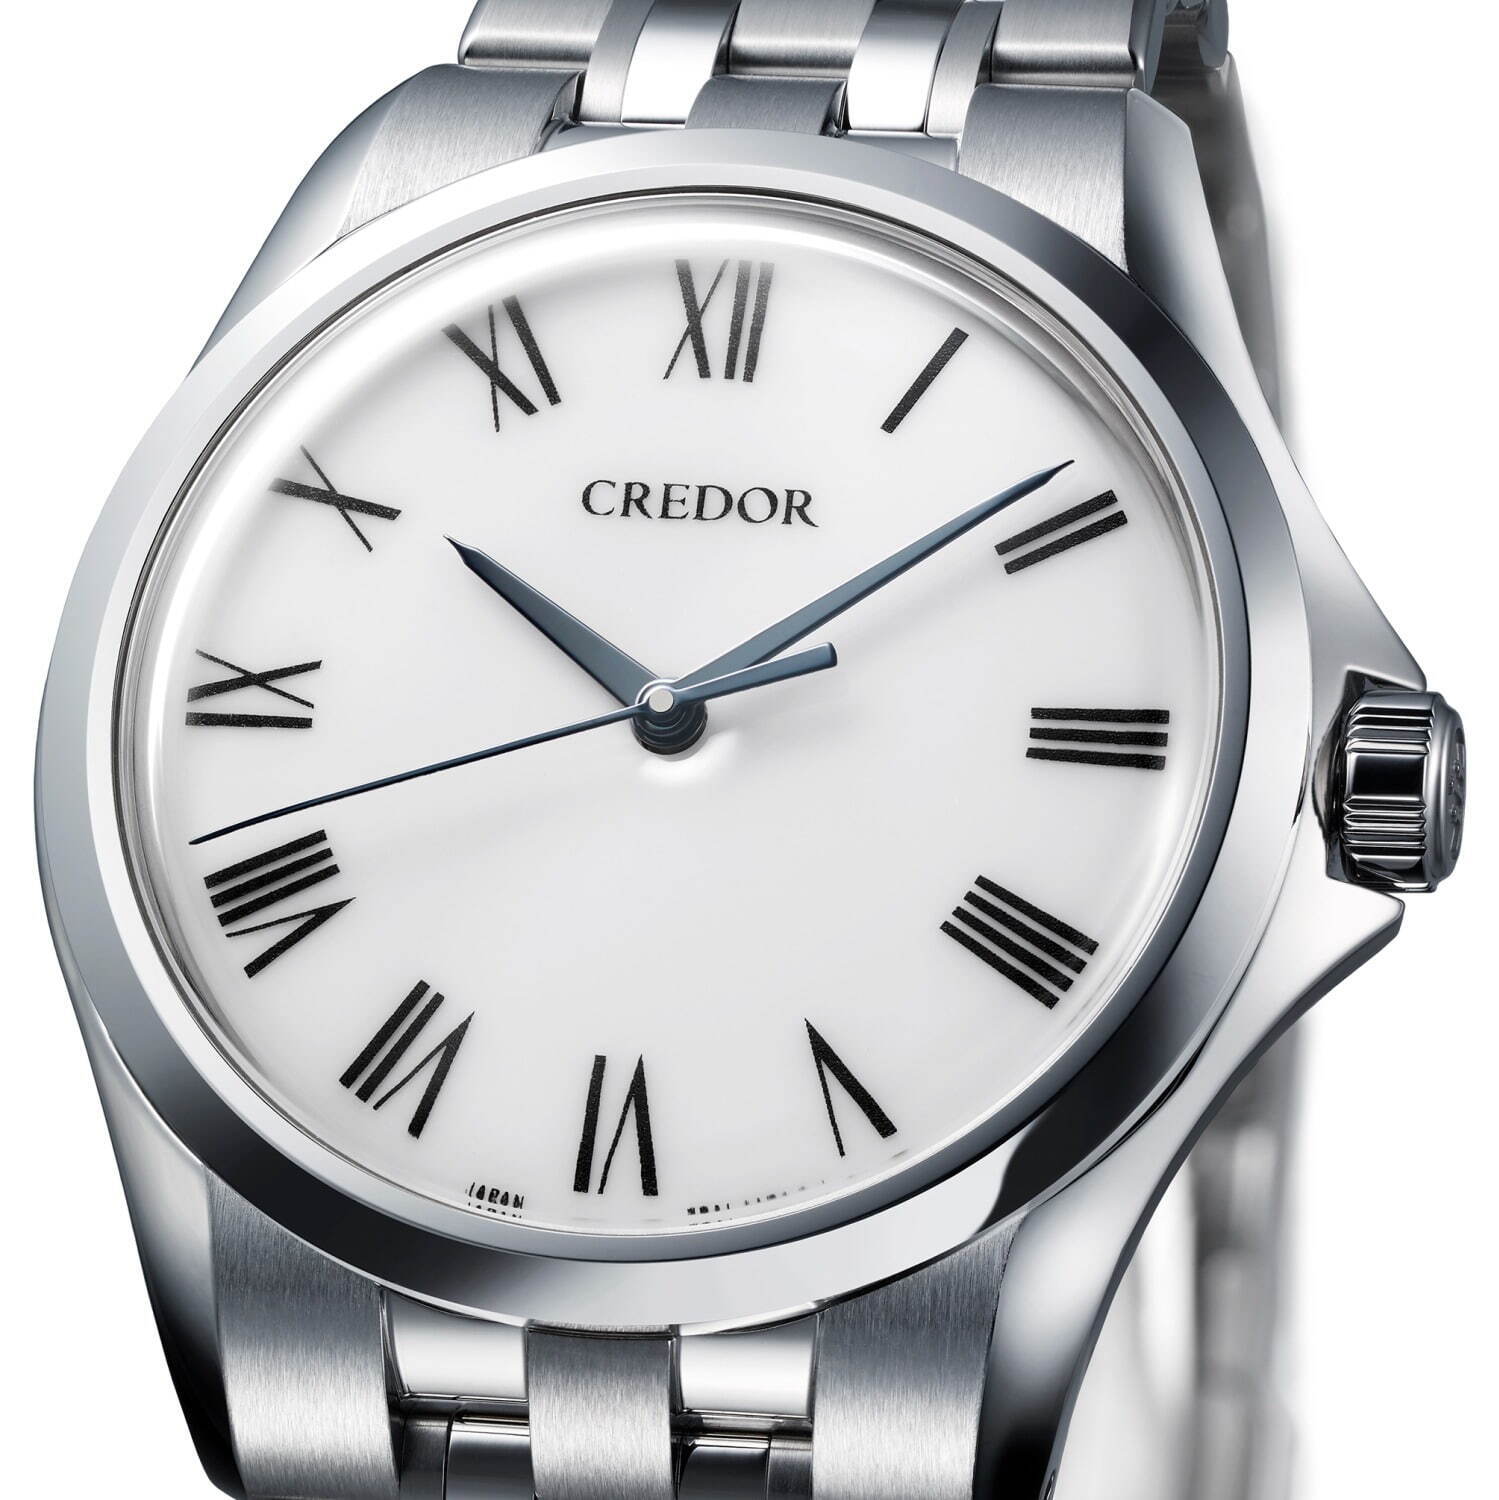 SEIKO クレドール メンズ時計 2021公式店舗 - 時計